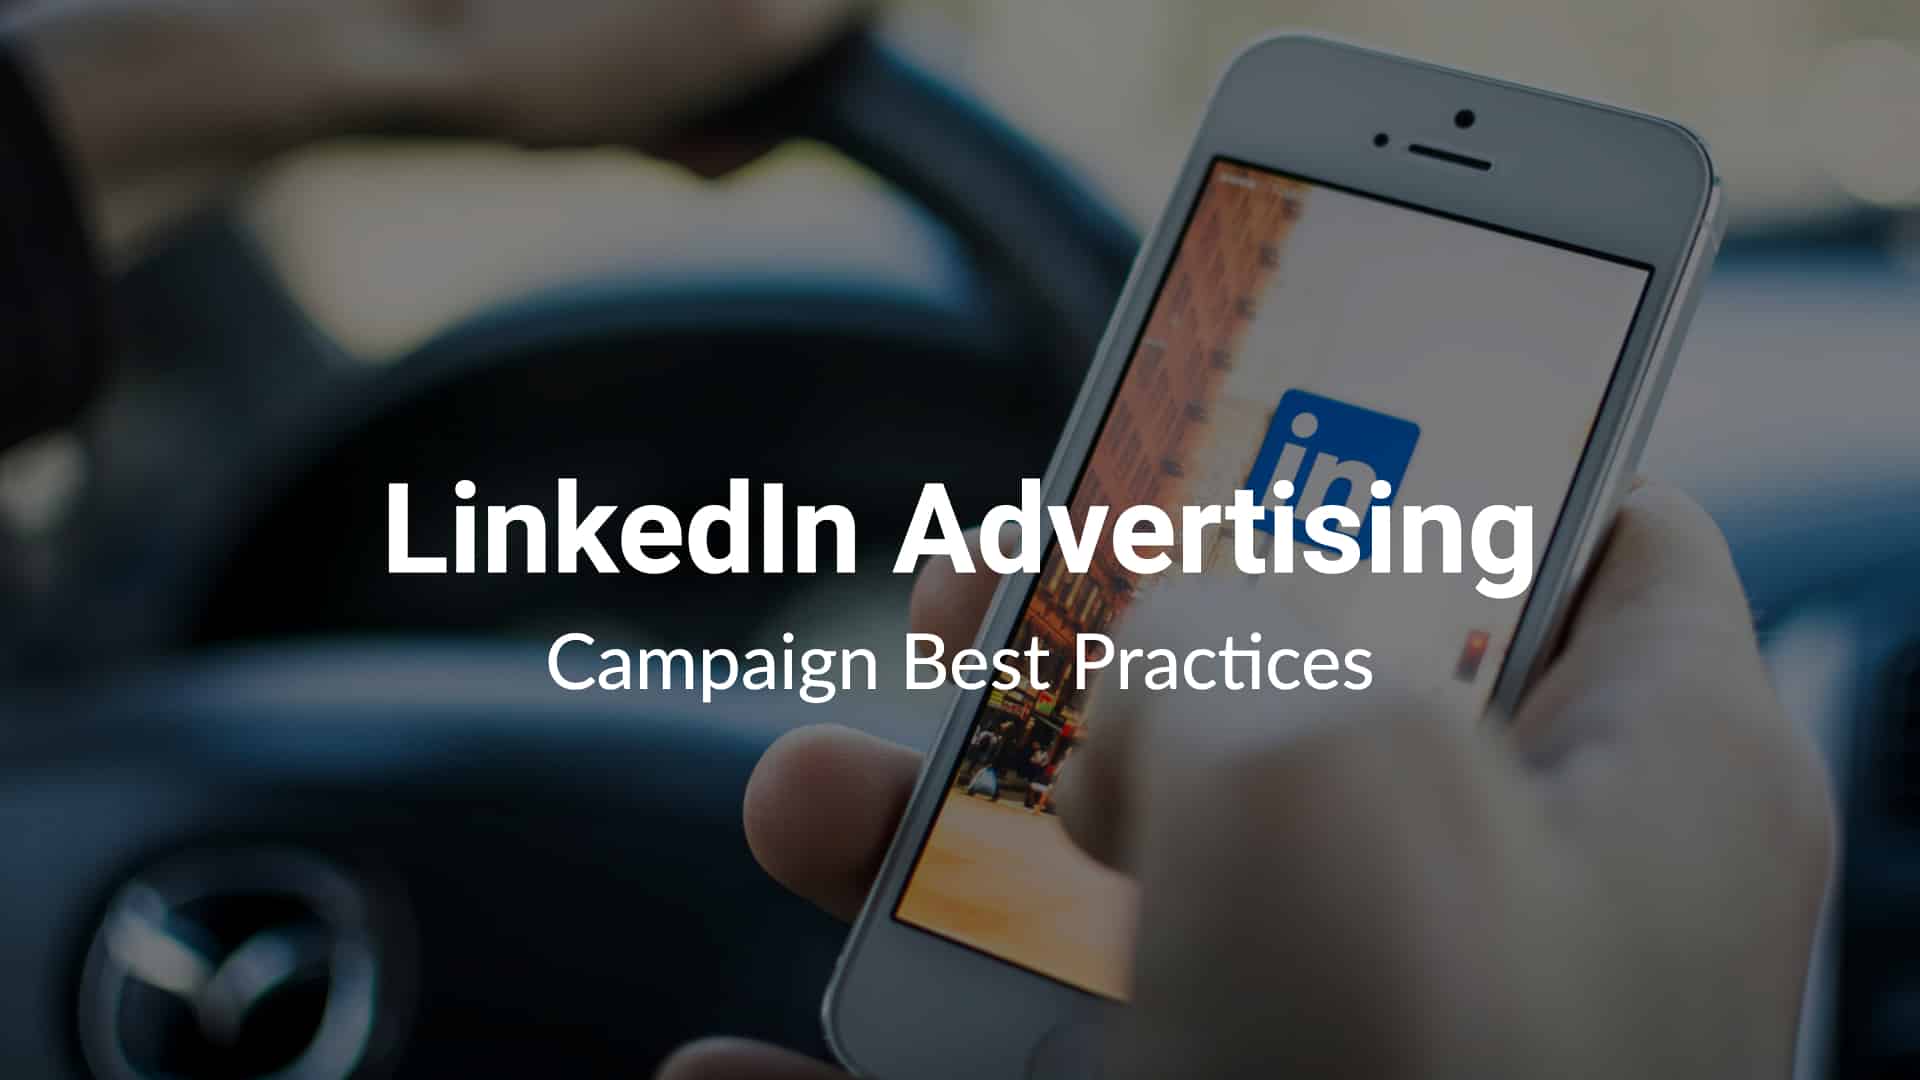 LinkedIn advertising best practices